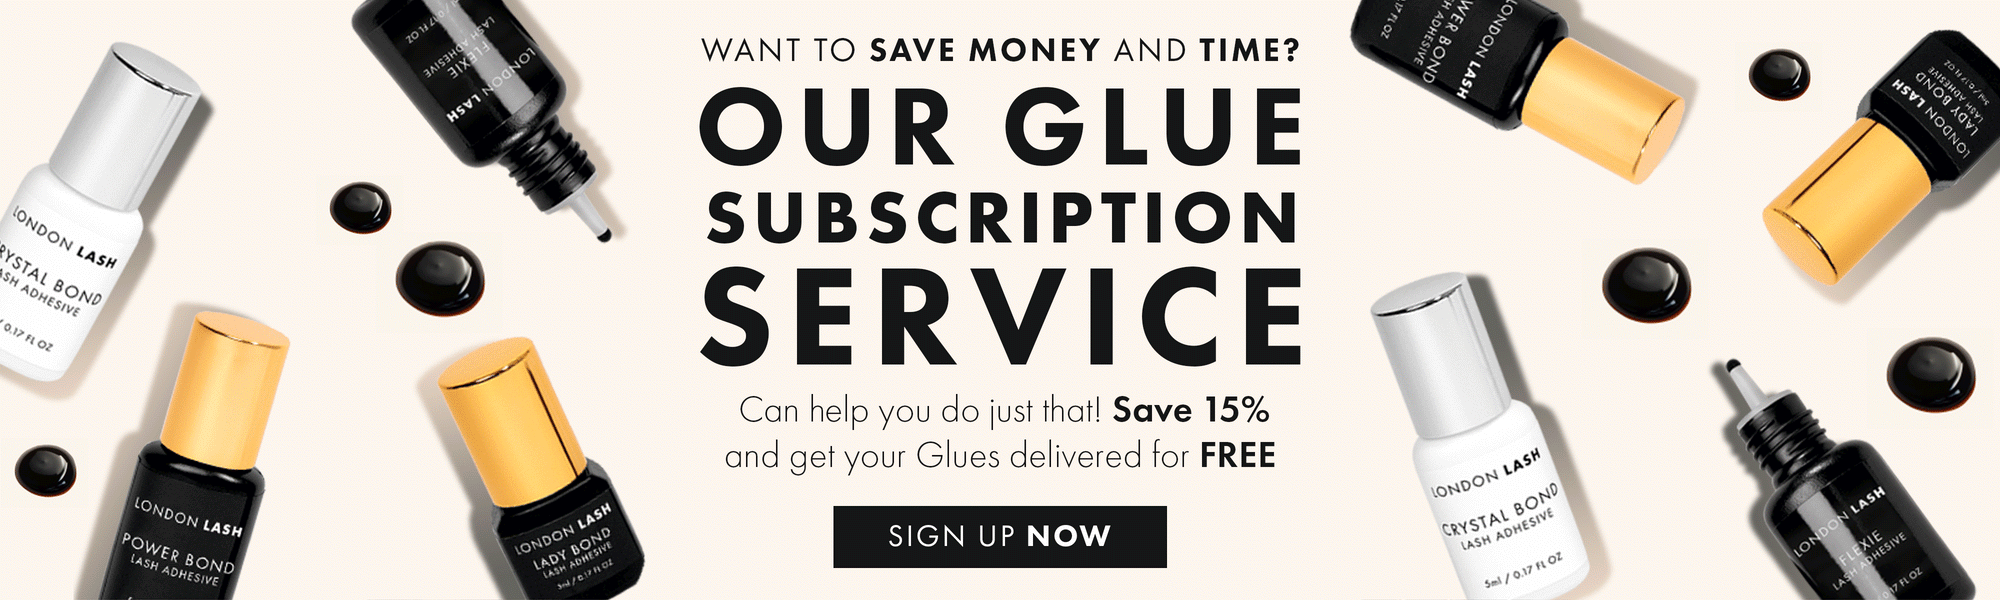 Glue Subscription Service